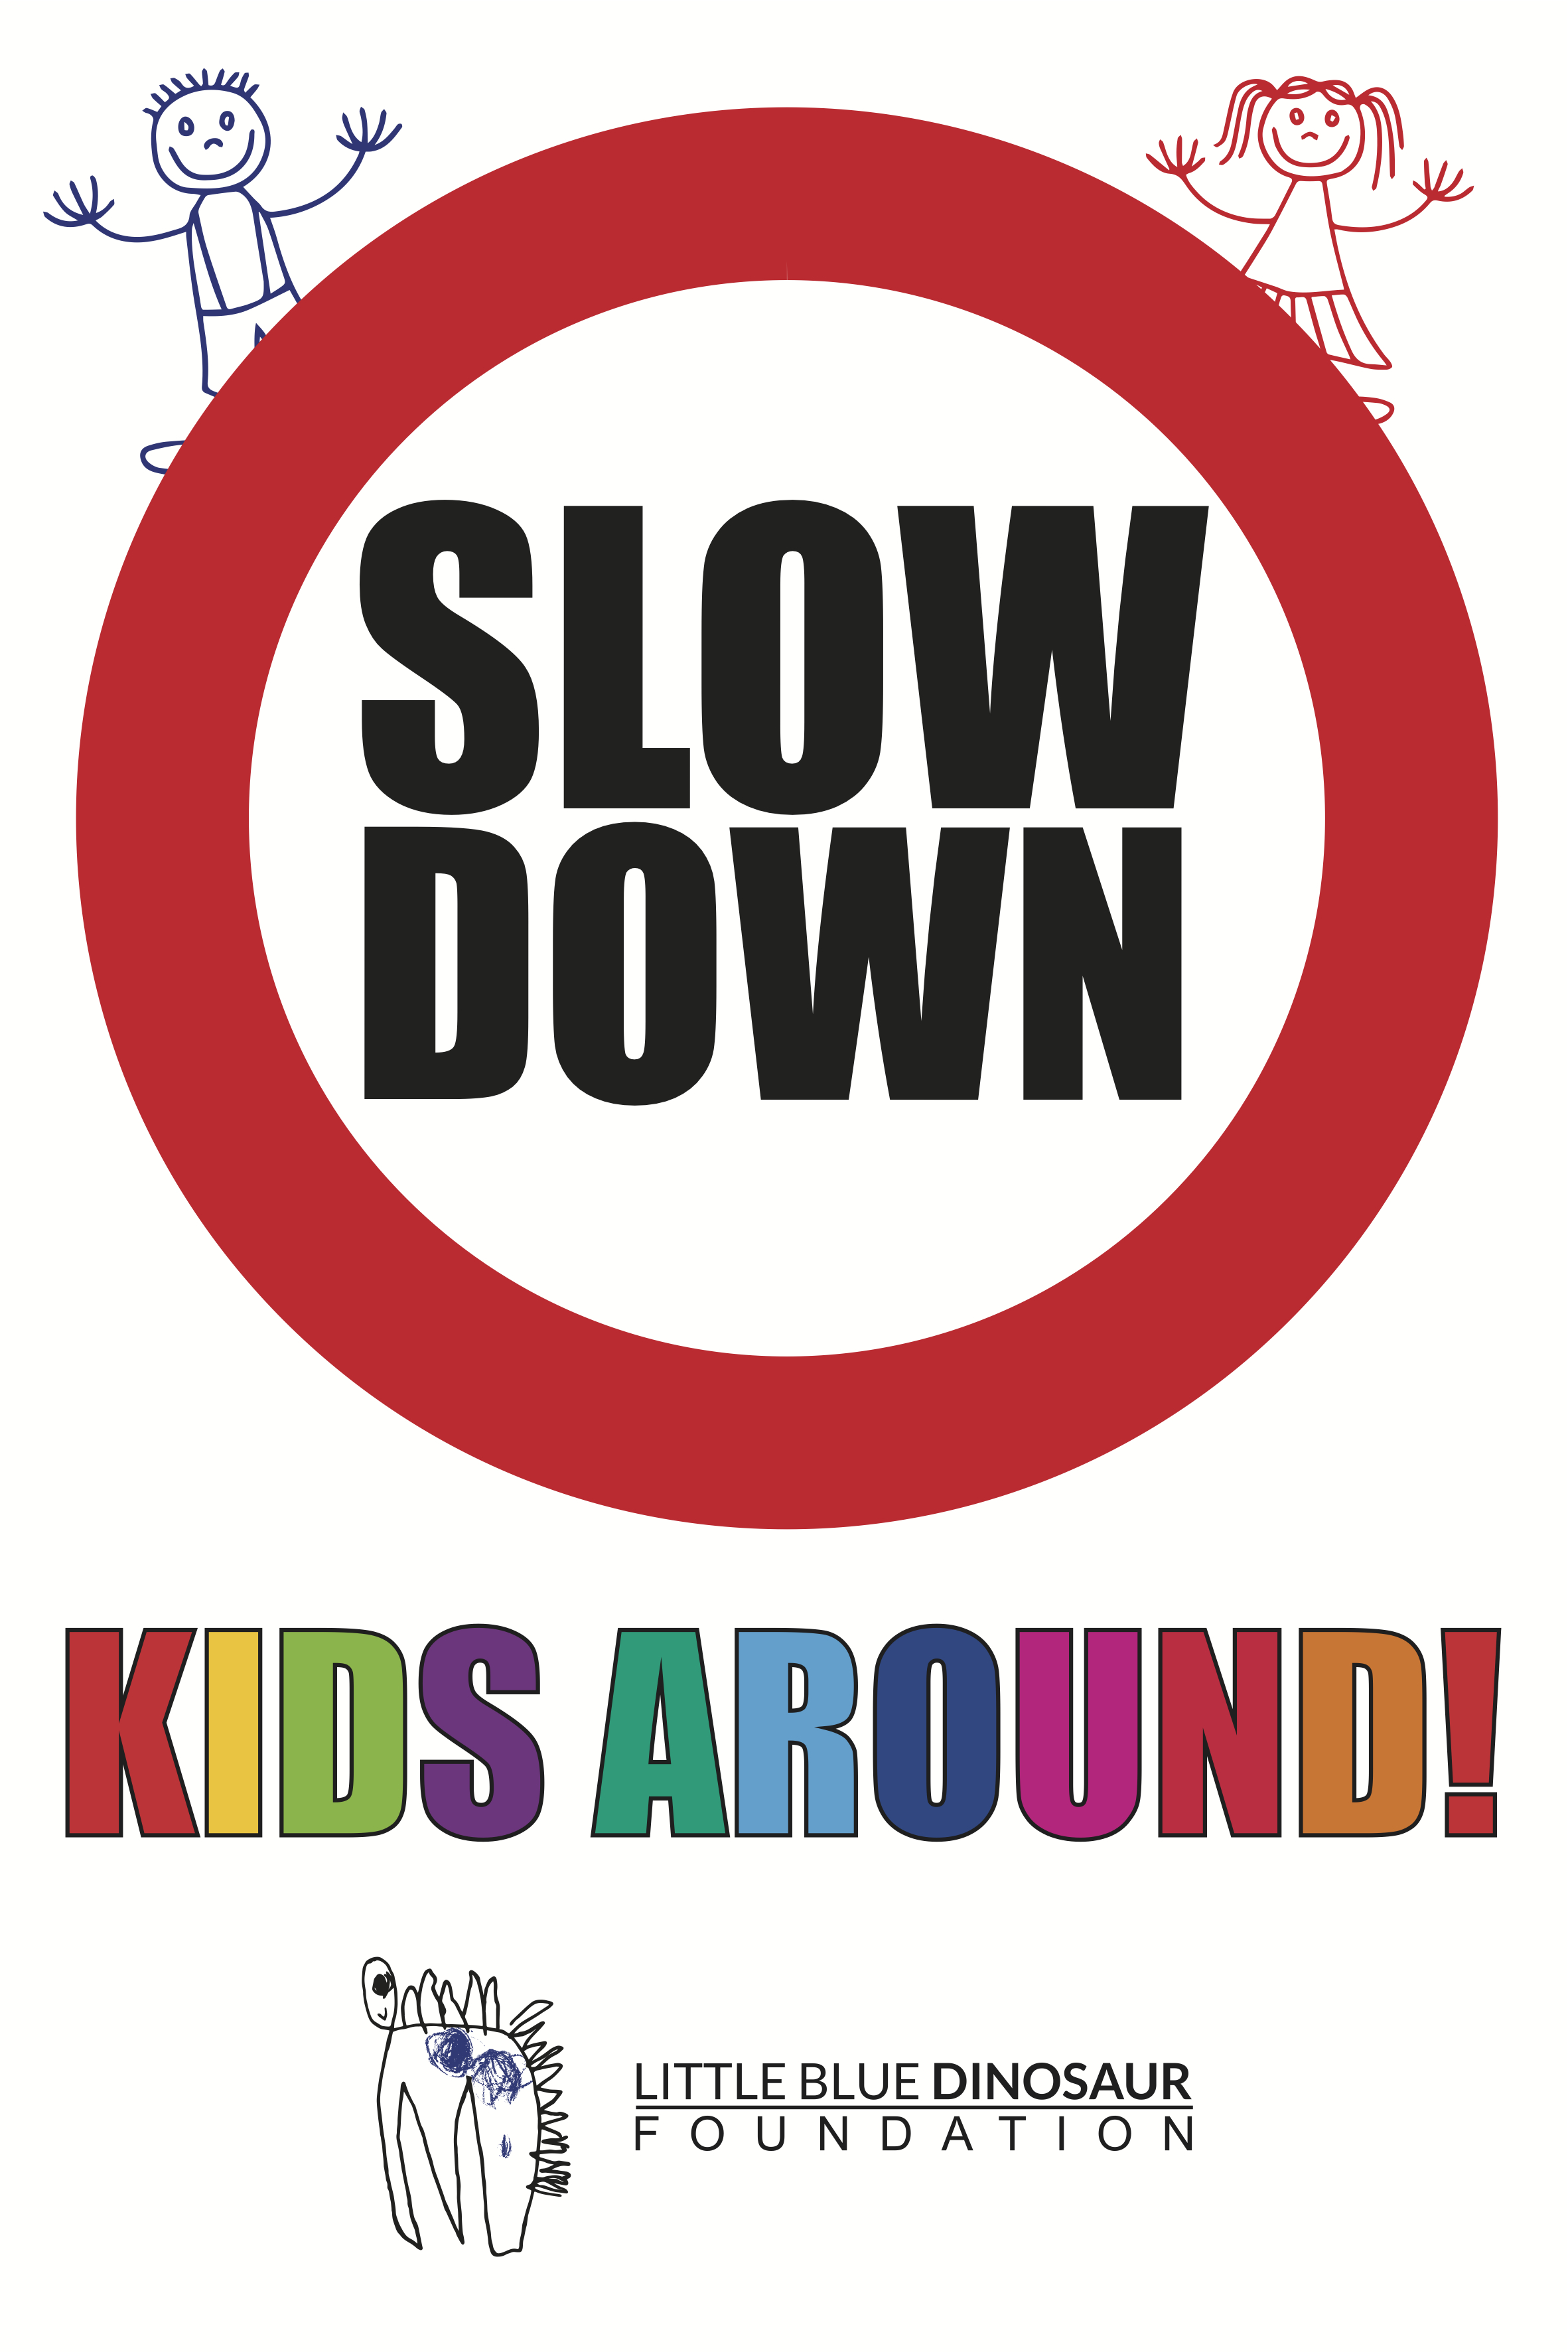 Slow down kids around image